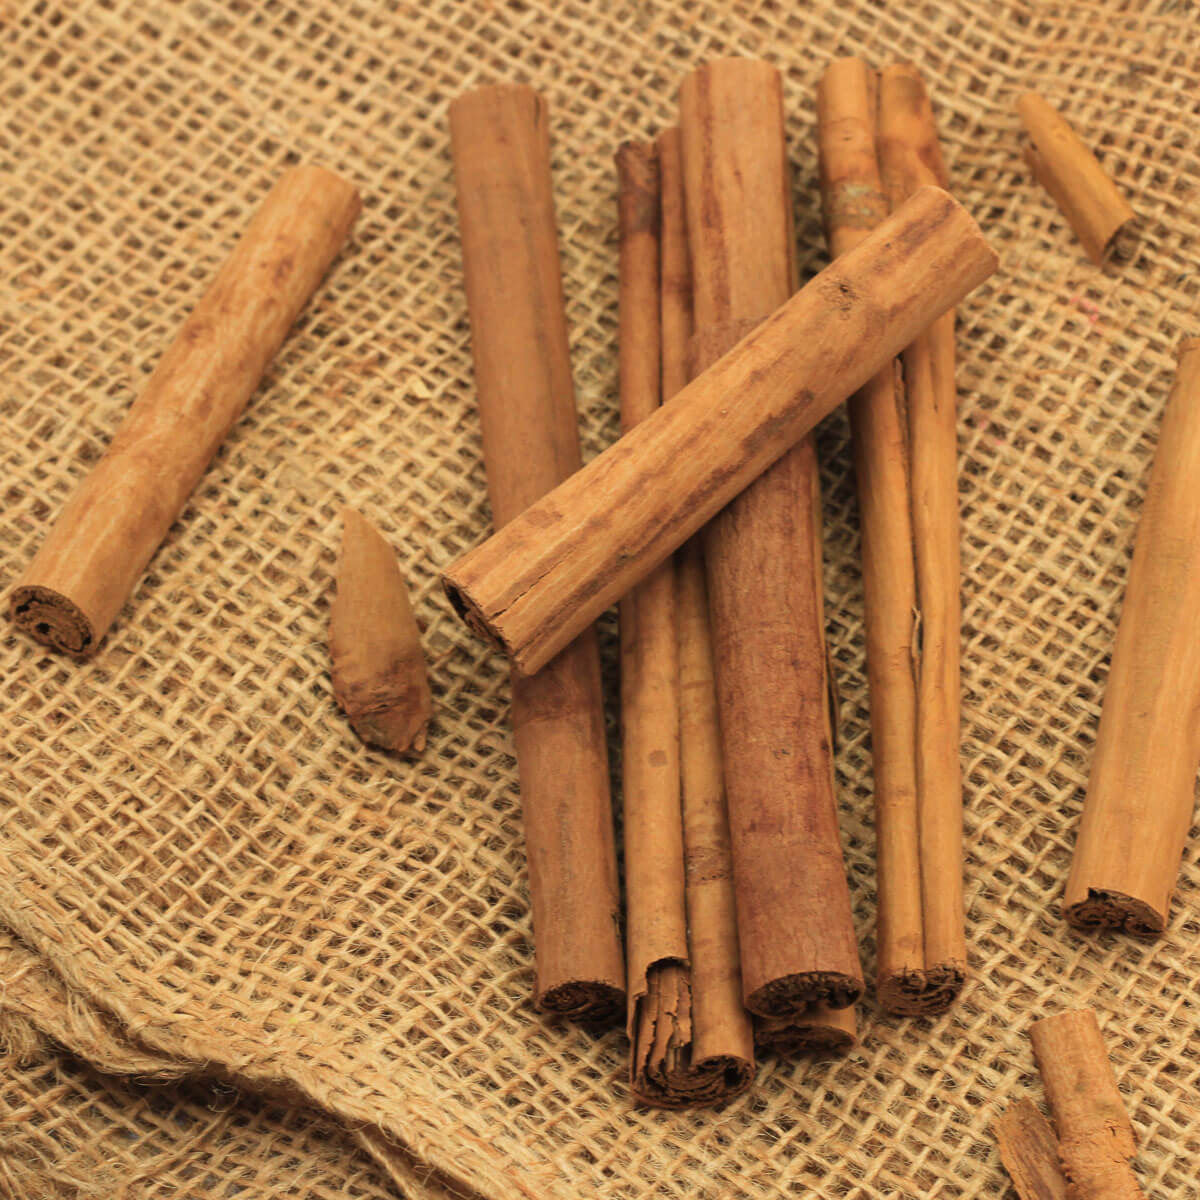 Single Origin Ceylon Cinnamon Sticks From Sri Lanka